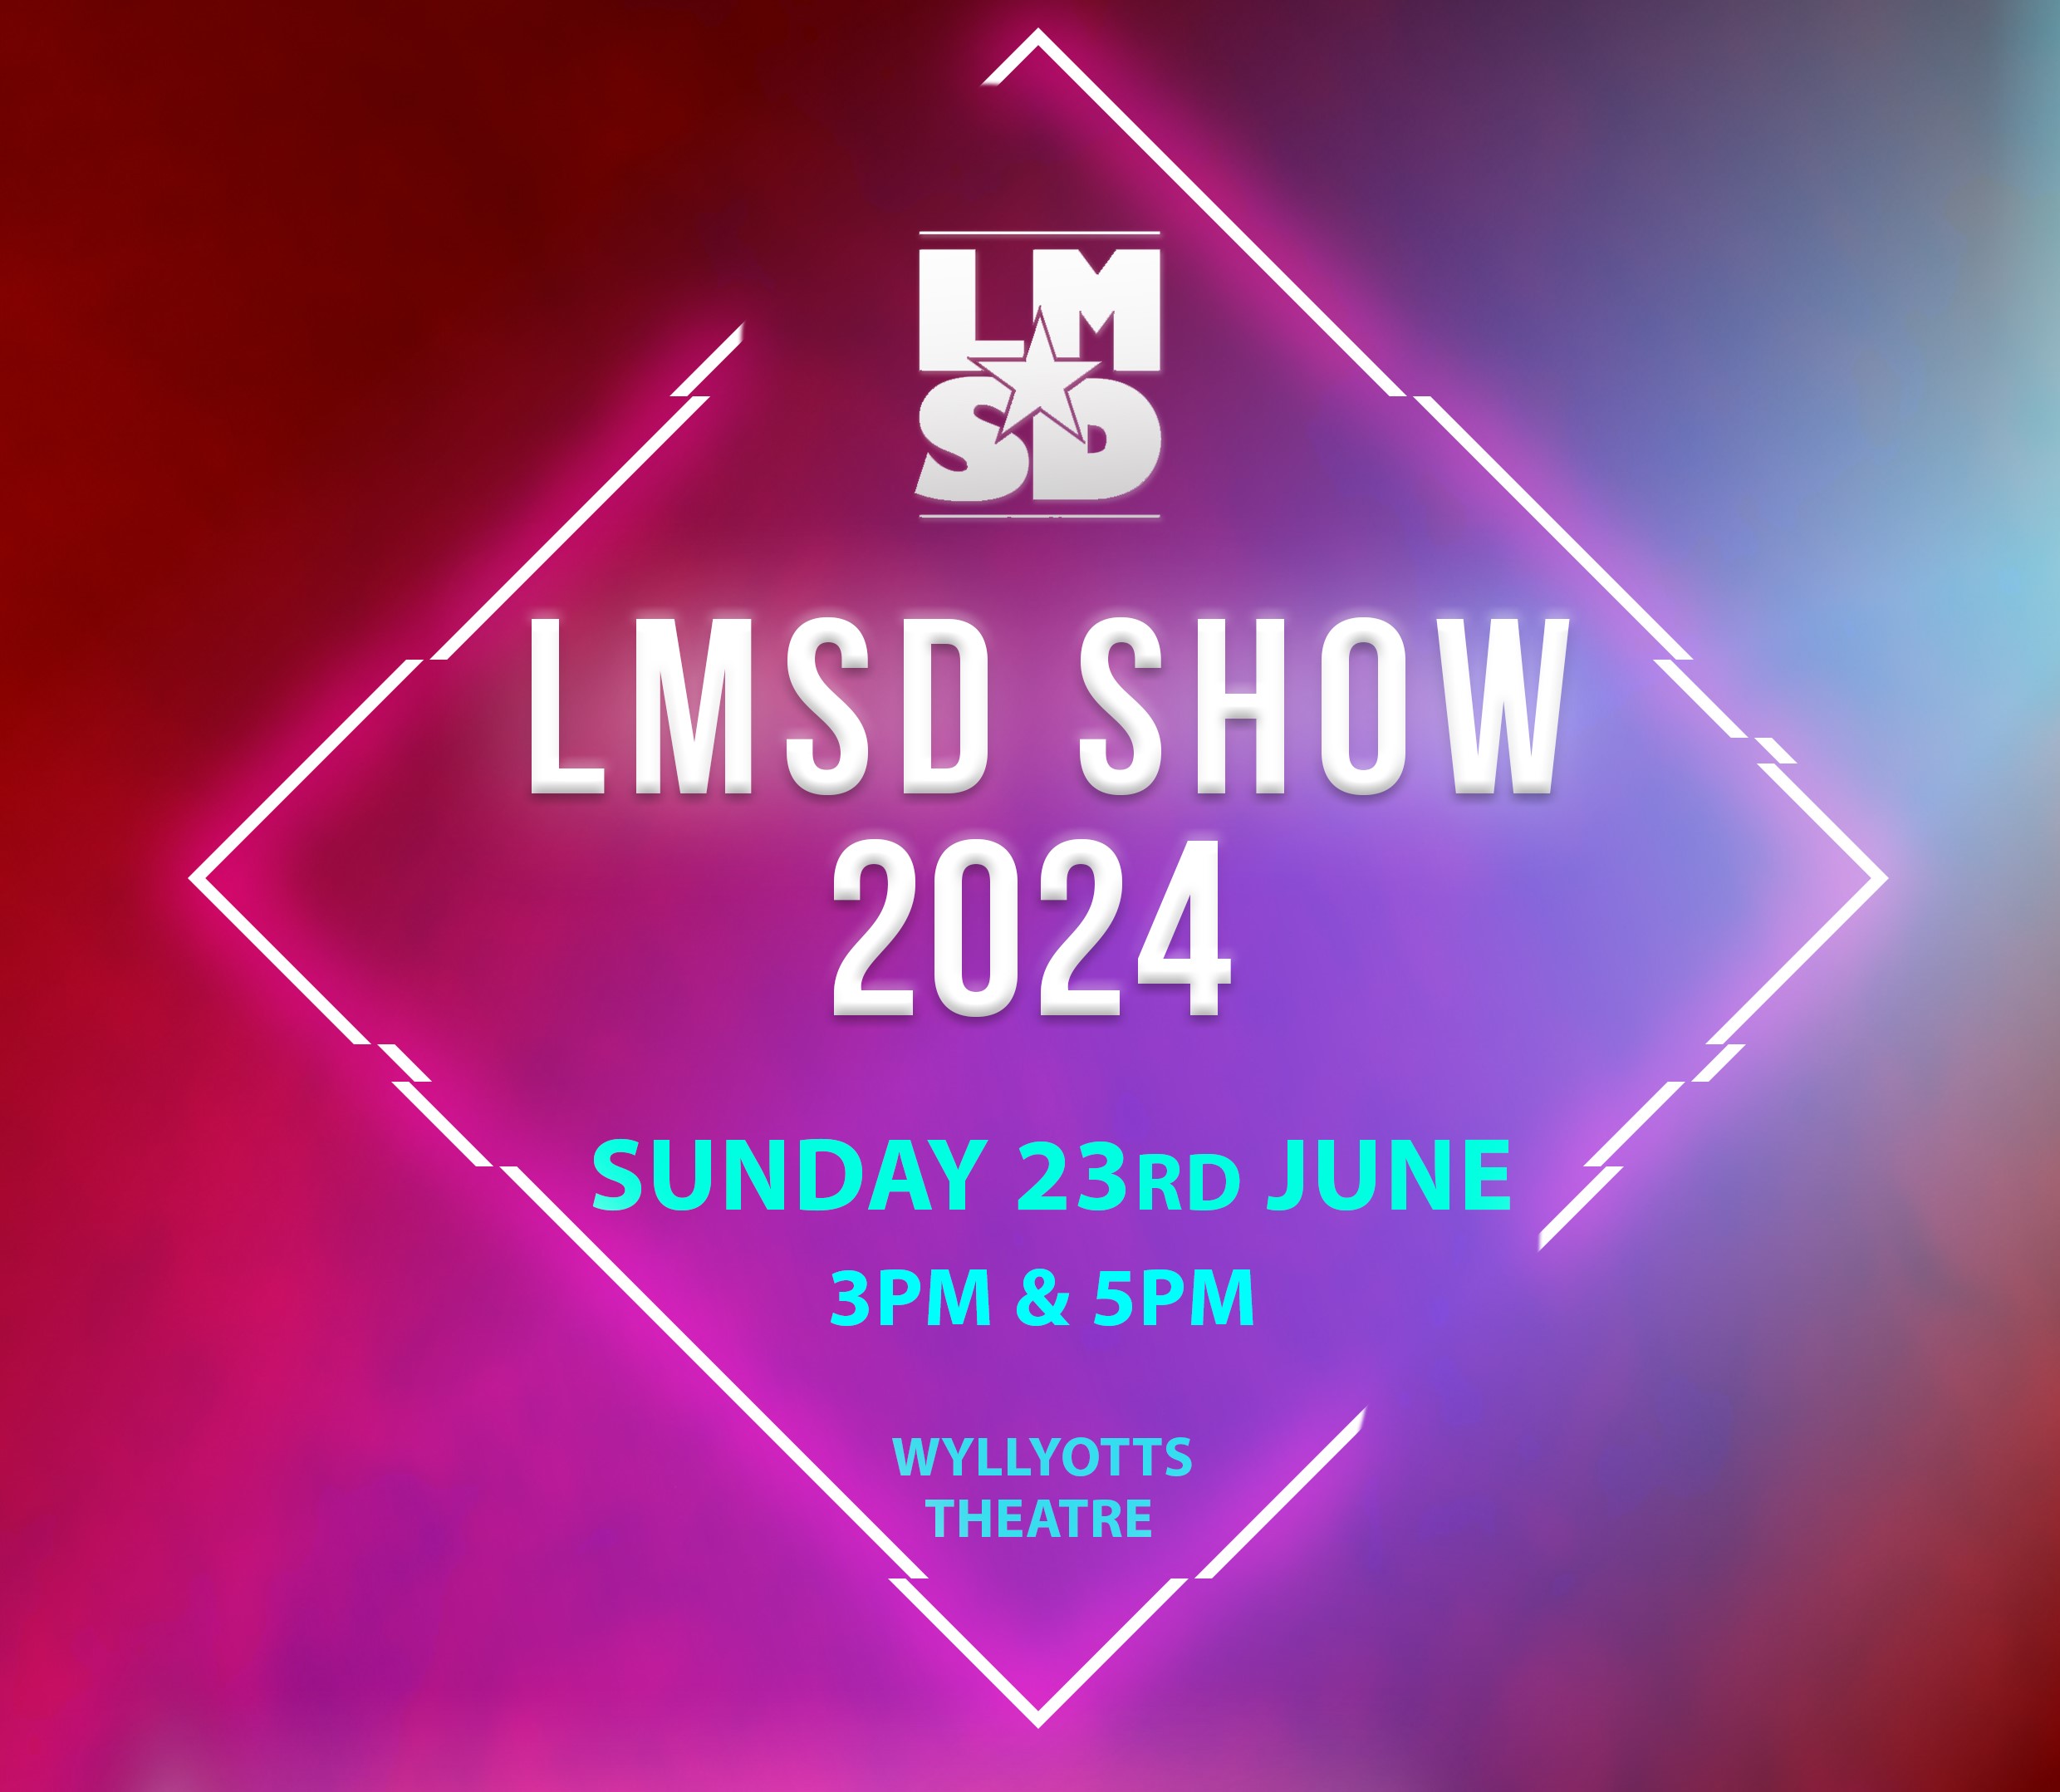 LMSD SHOW 2024